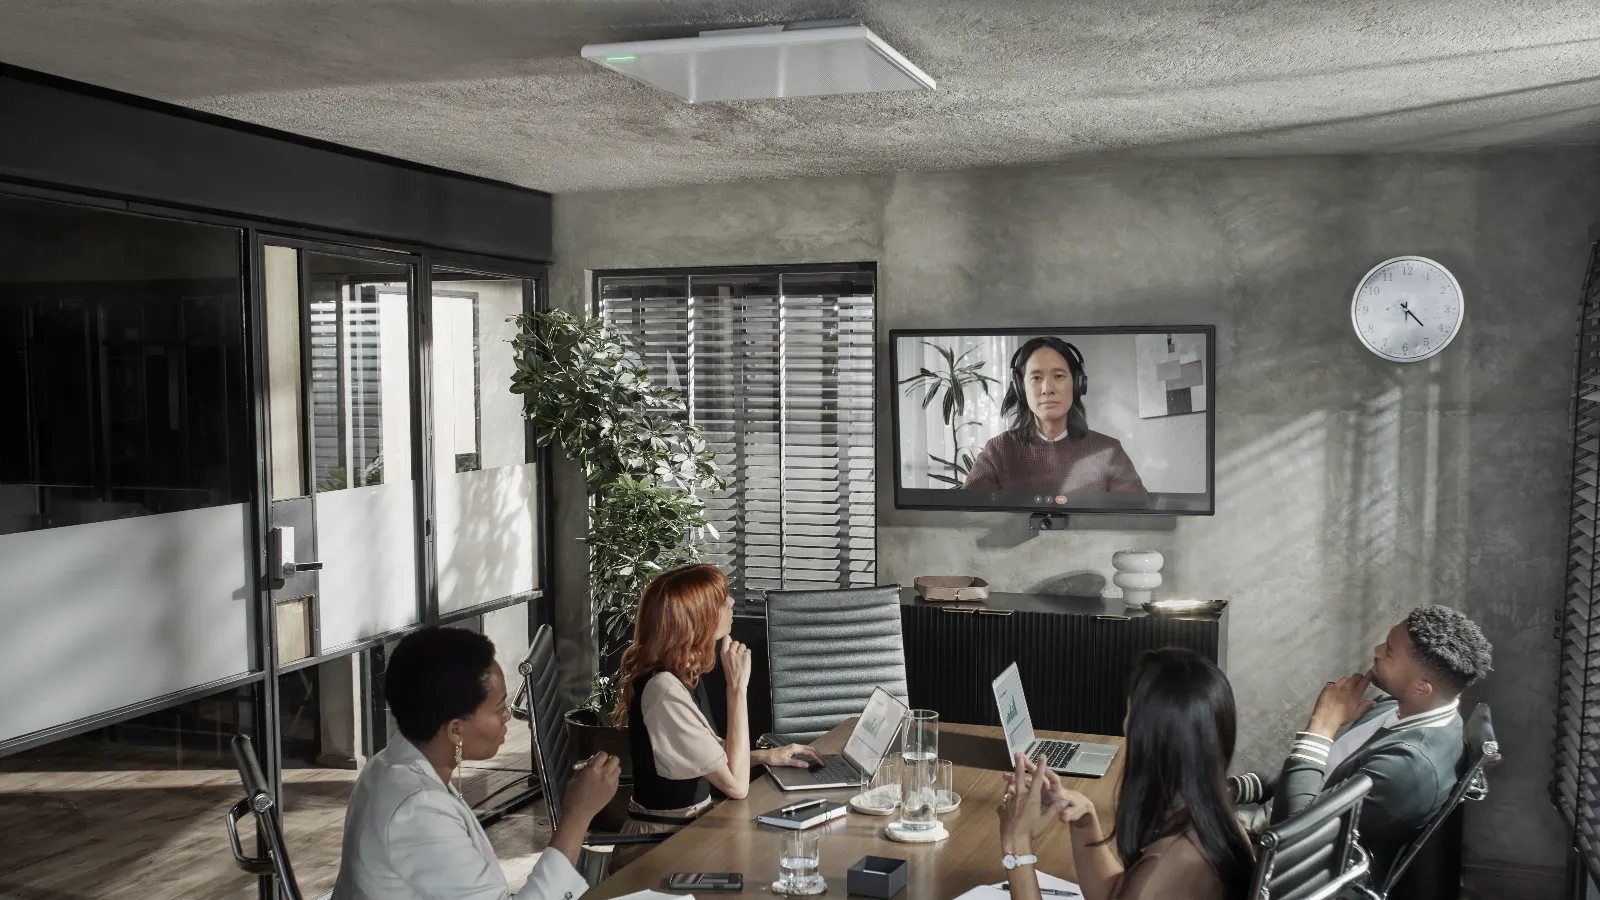 Group of people videoconferencing in a meeting room